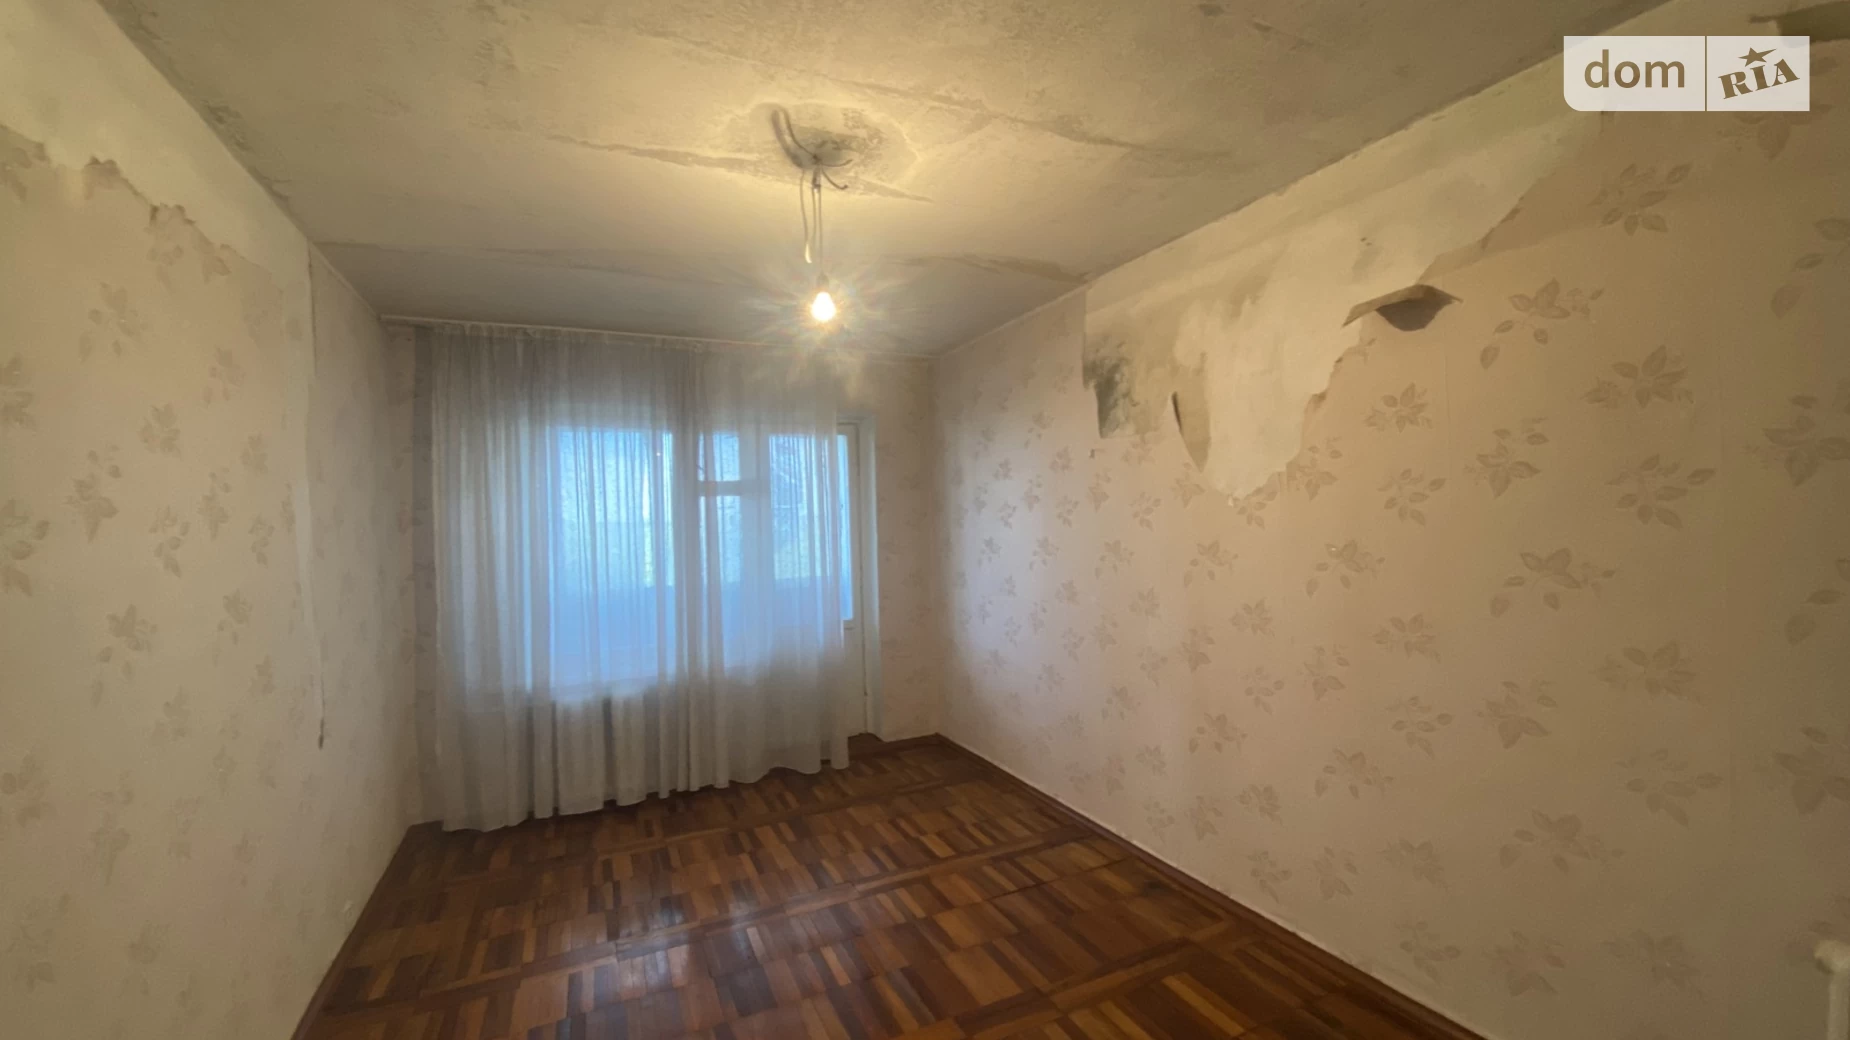 3-кімнатна квартира 66.2 кв. м у Запоріжжі, вул. Дегтярьова